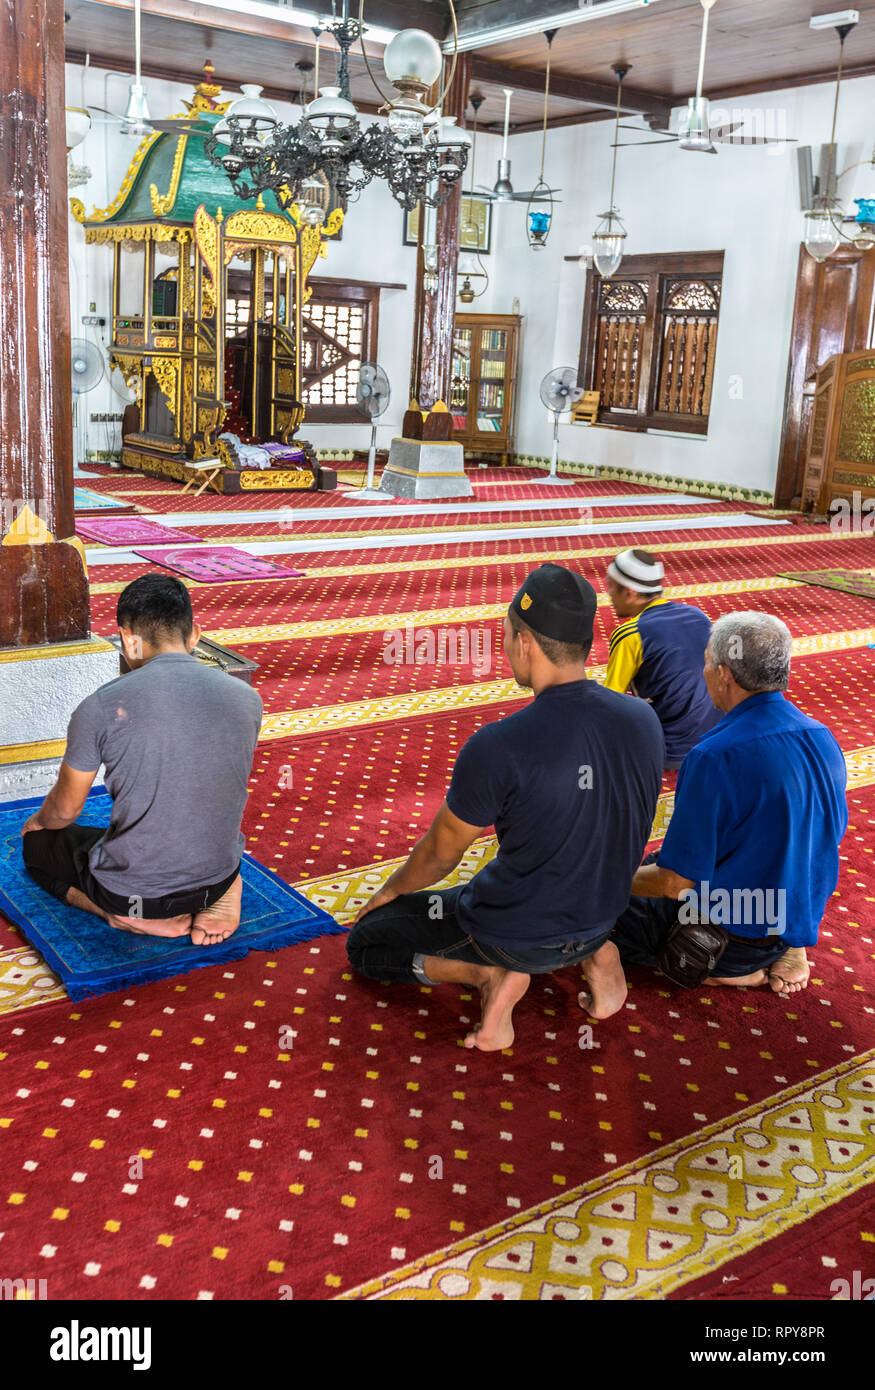 Junge Männer beten im Gebetsraum der Moschee Masjid Hulu Hulu, Melaka, Malaysia. Stockfoto